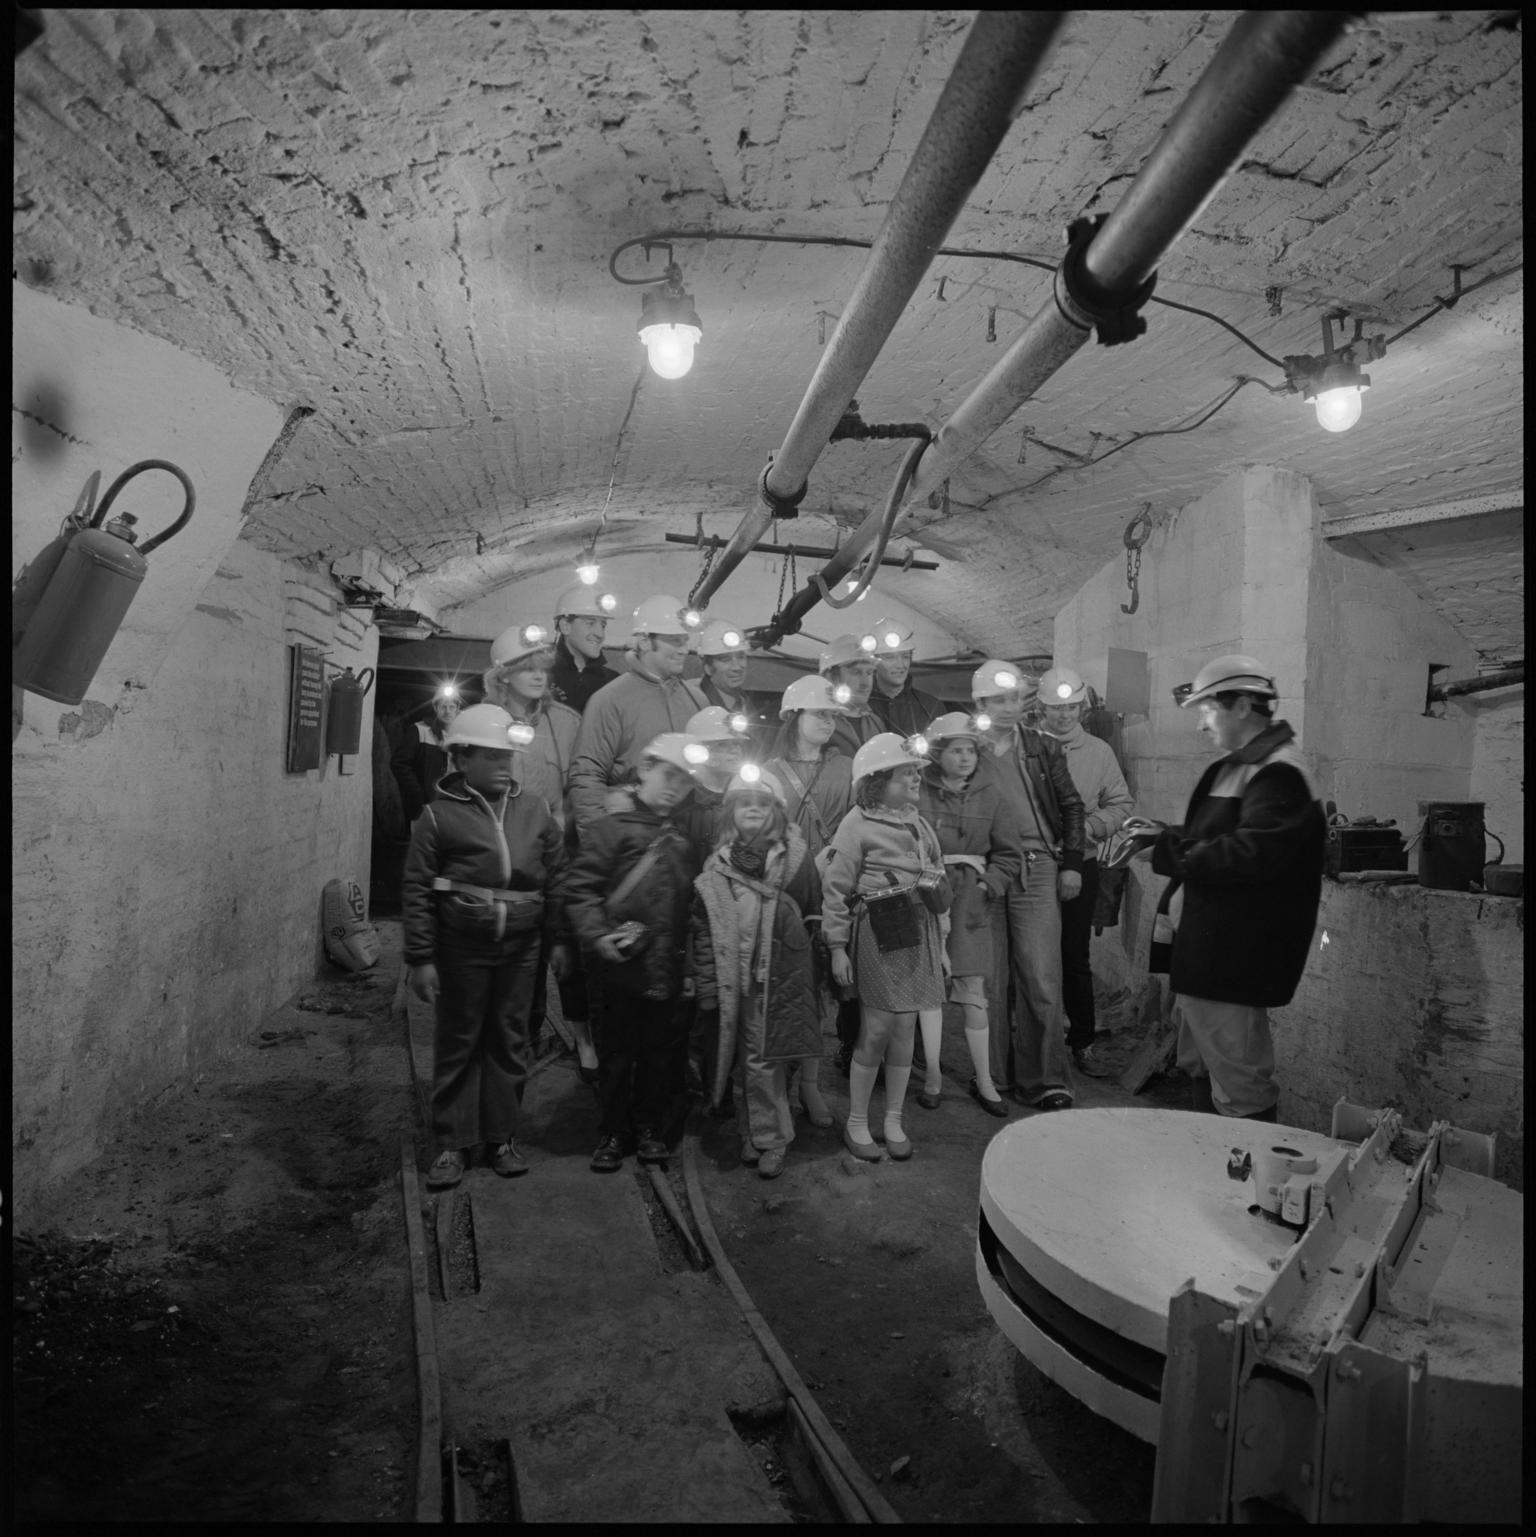 Big Pit Mining Museum, film negative